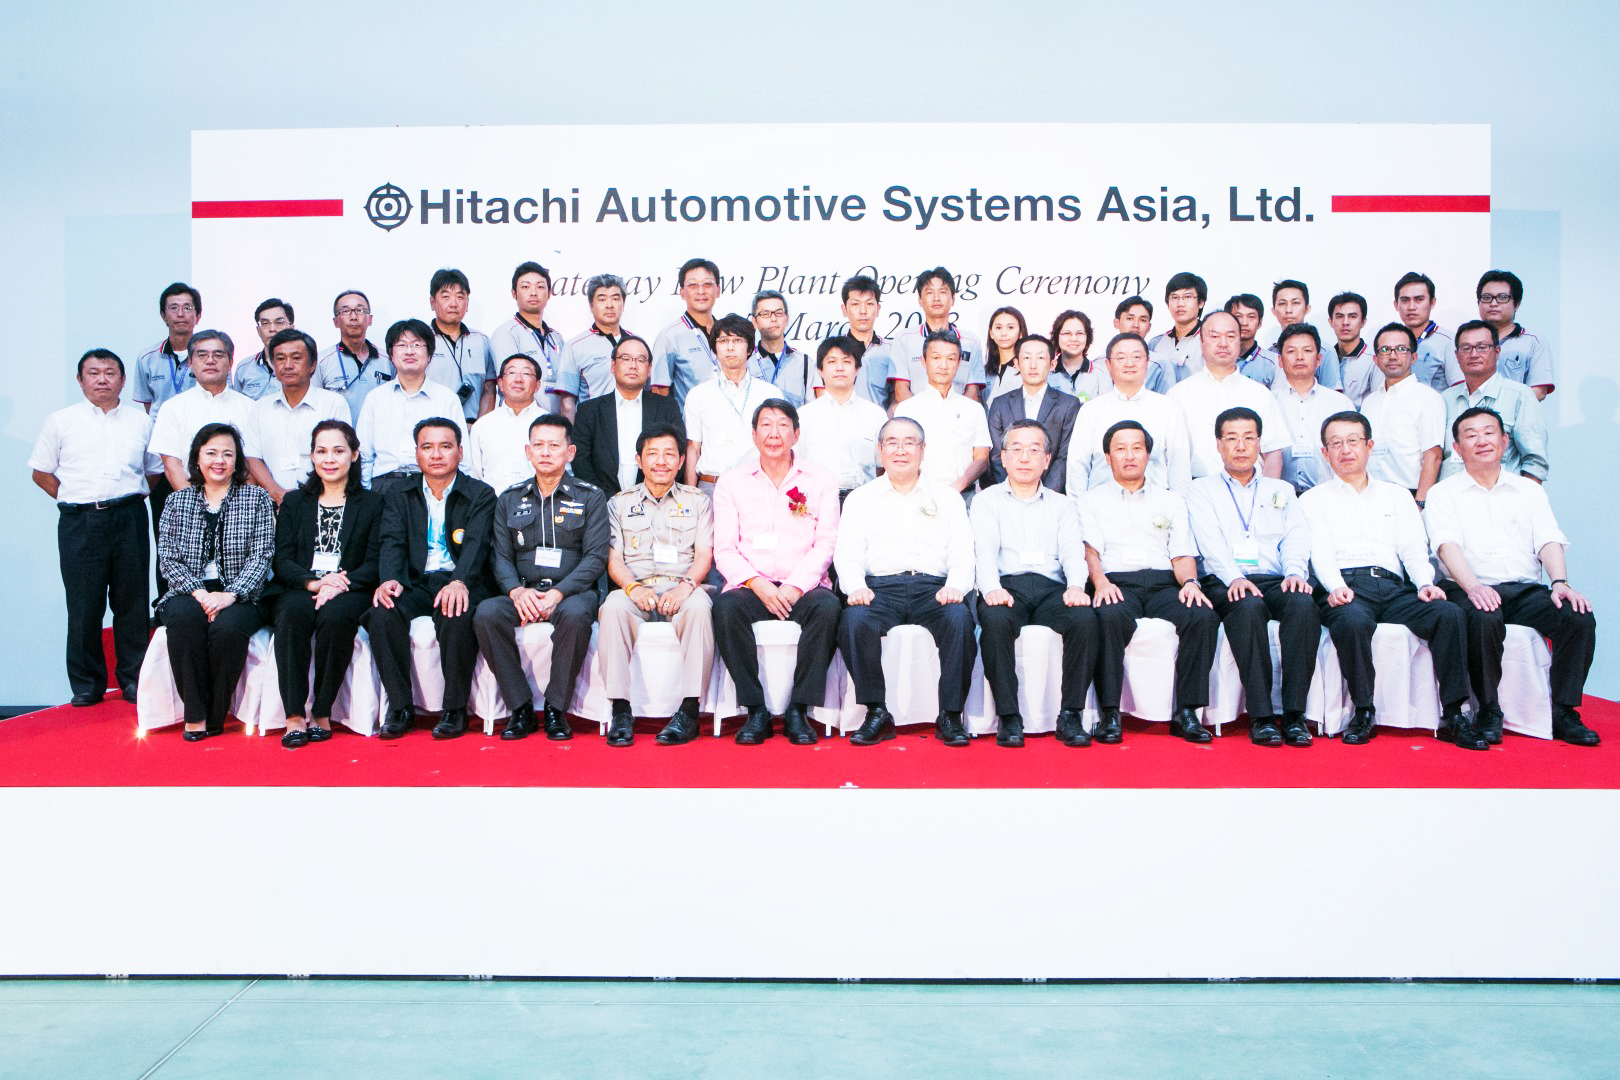 Opening Ceremony : Hitachi Automotive Systems 